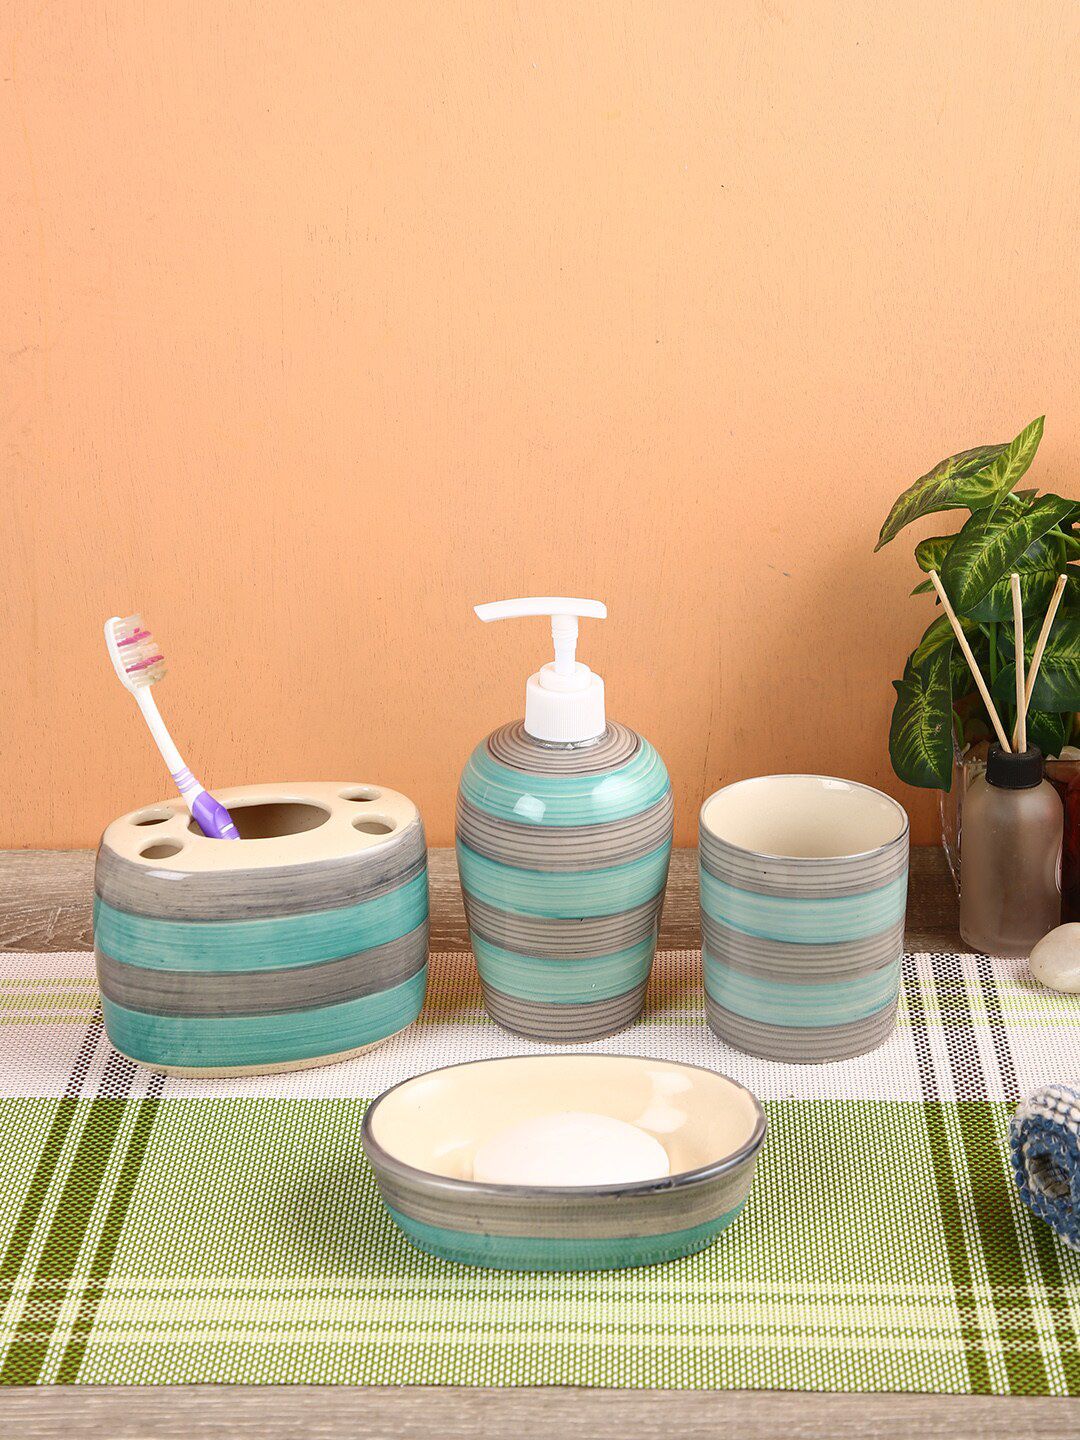 Aapno Rajasthan Set Of 4 Blue & Grey Printed Ceramic Bathroom Accessories Price in India